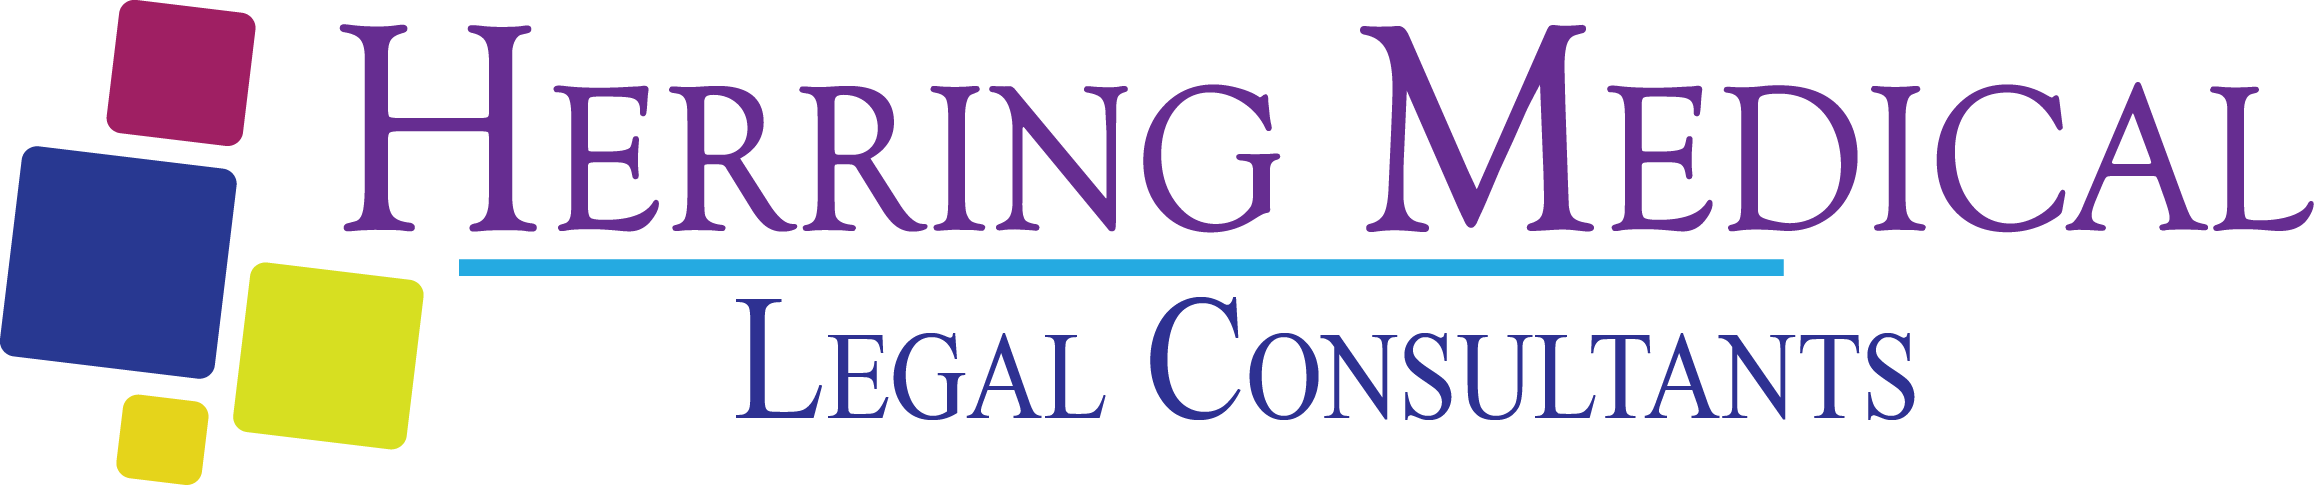 Herring Medical Legal Consultants